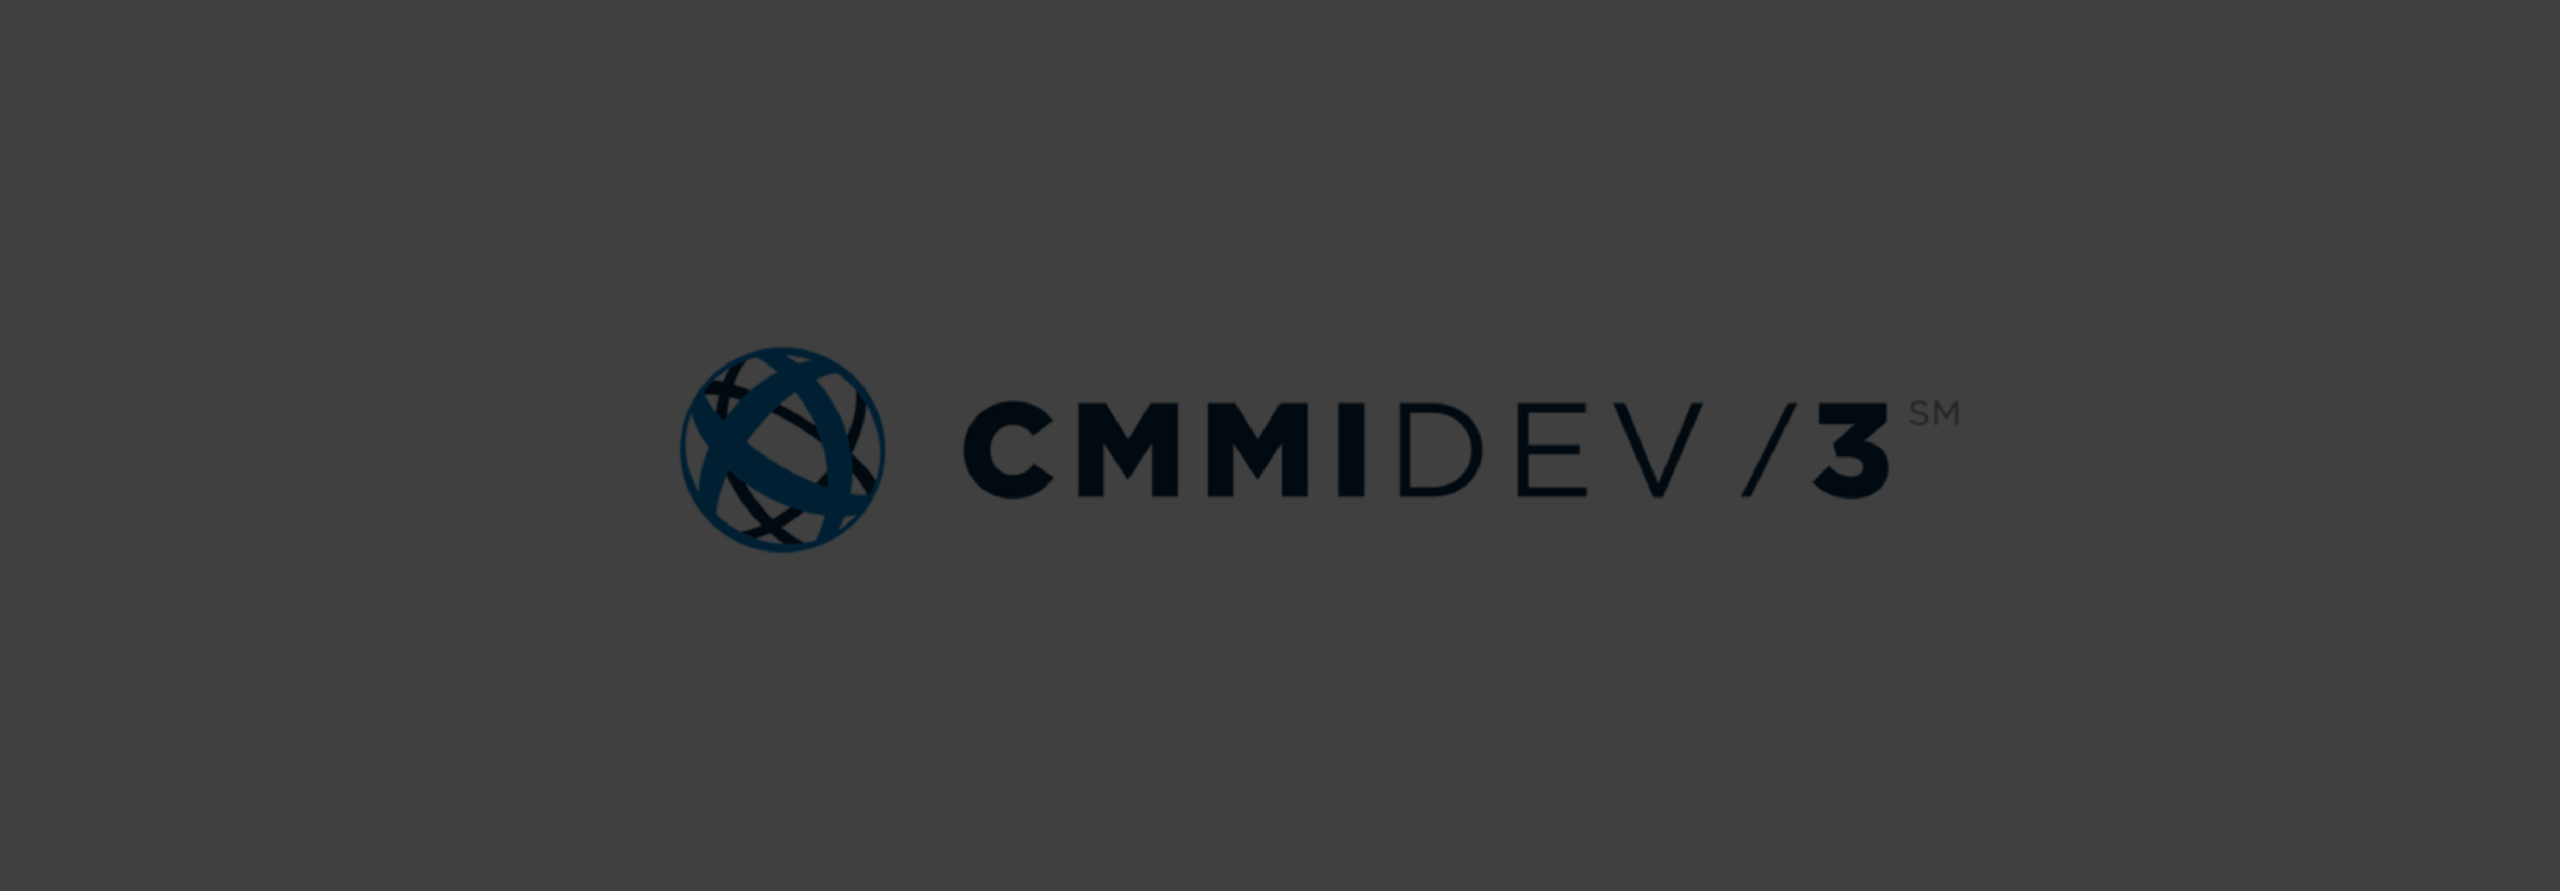 CMMIDEV/3 Logo